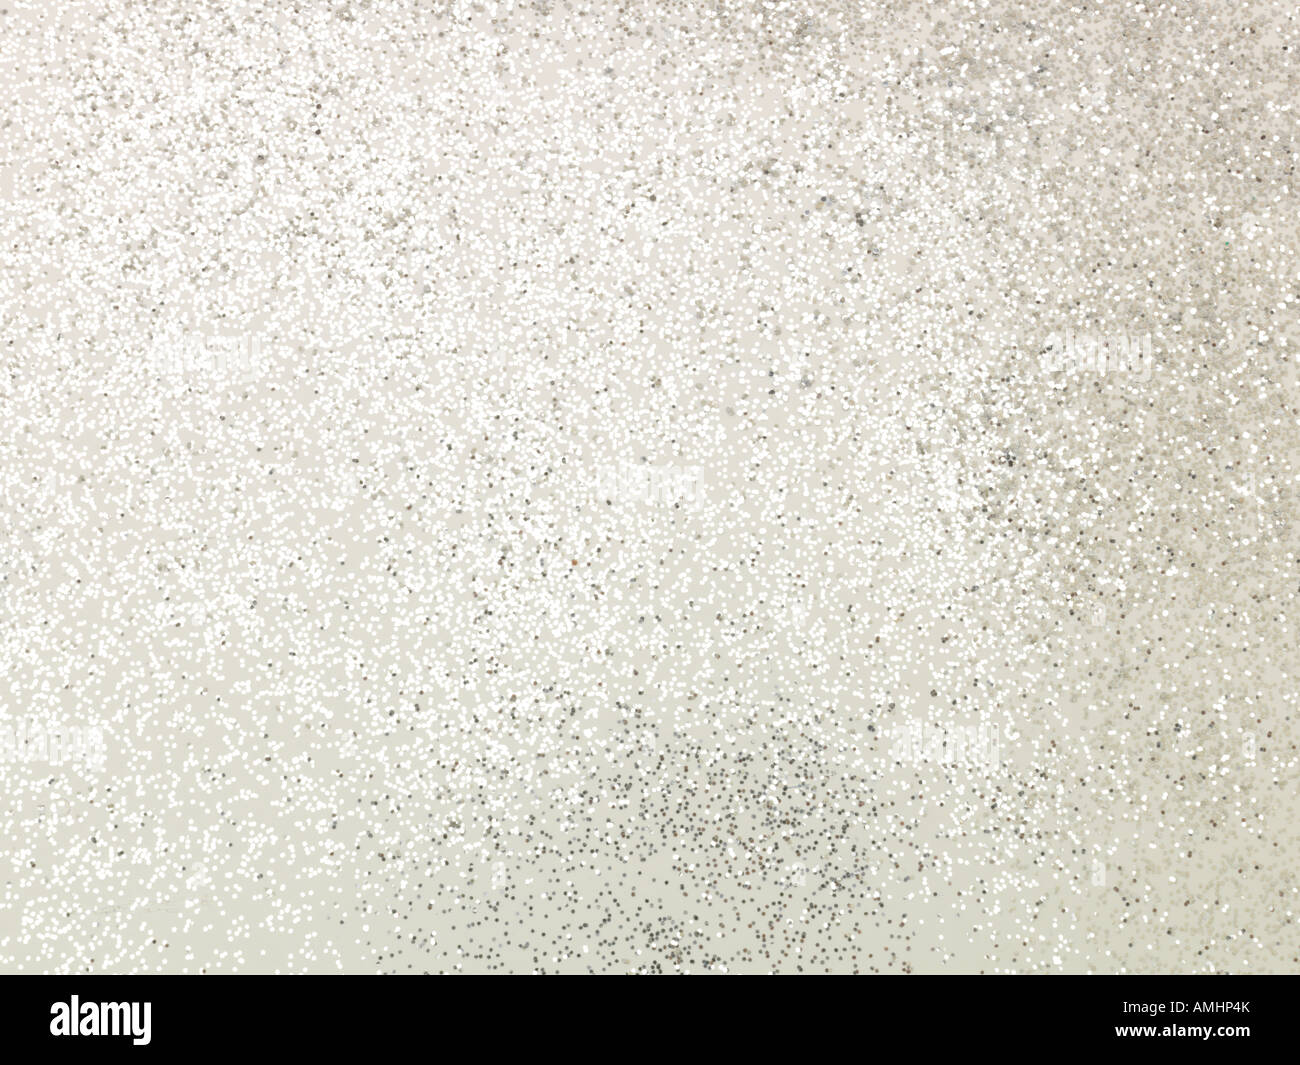 Silver Glitter Background Stock Photo